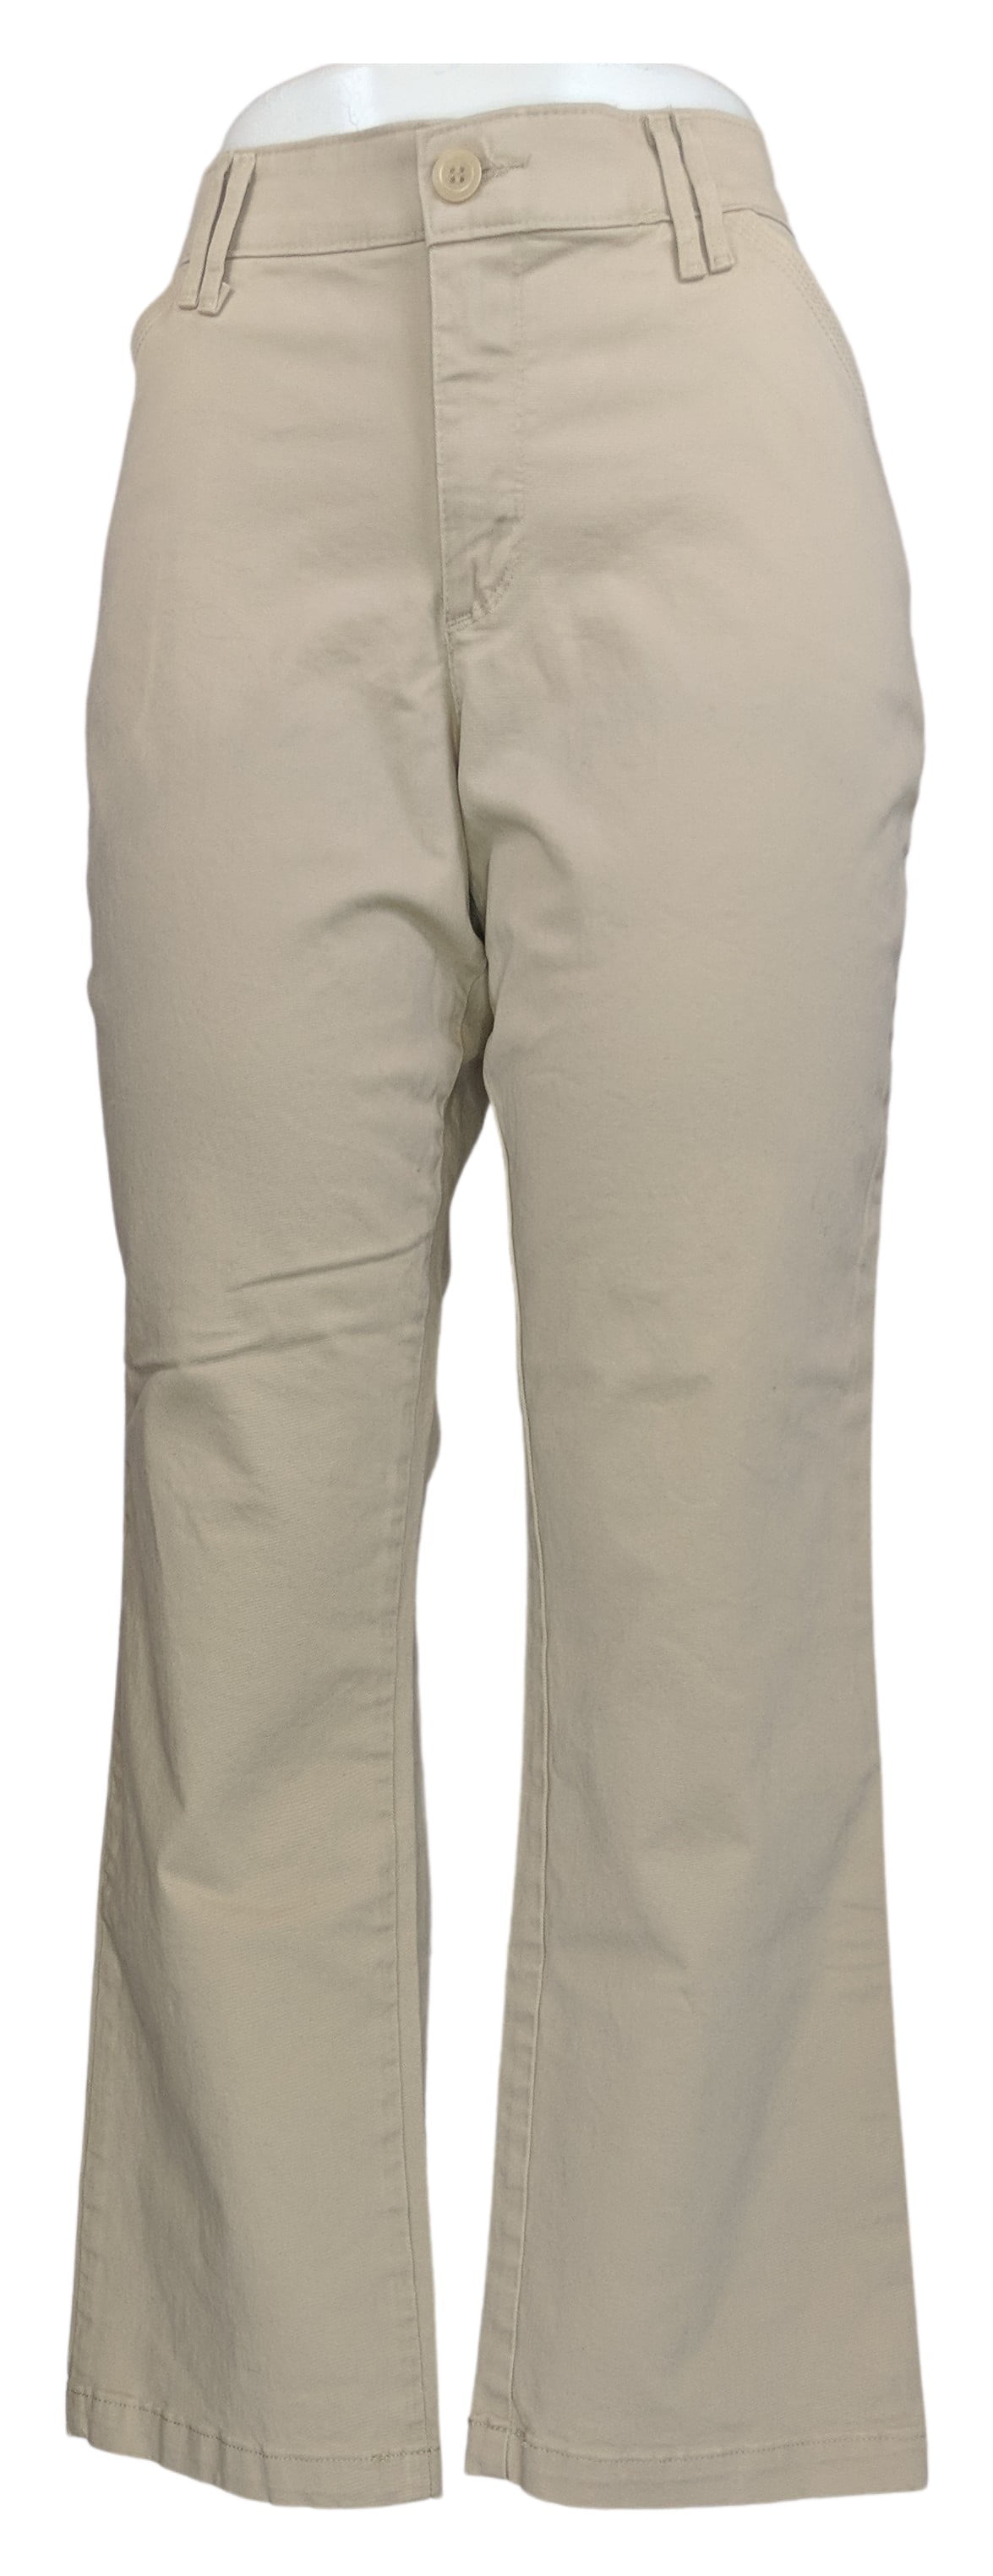 lee comfort stretch waistband pants